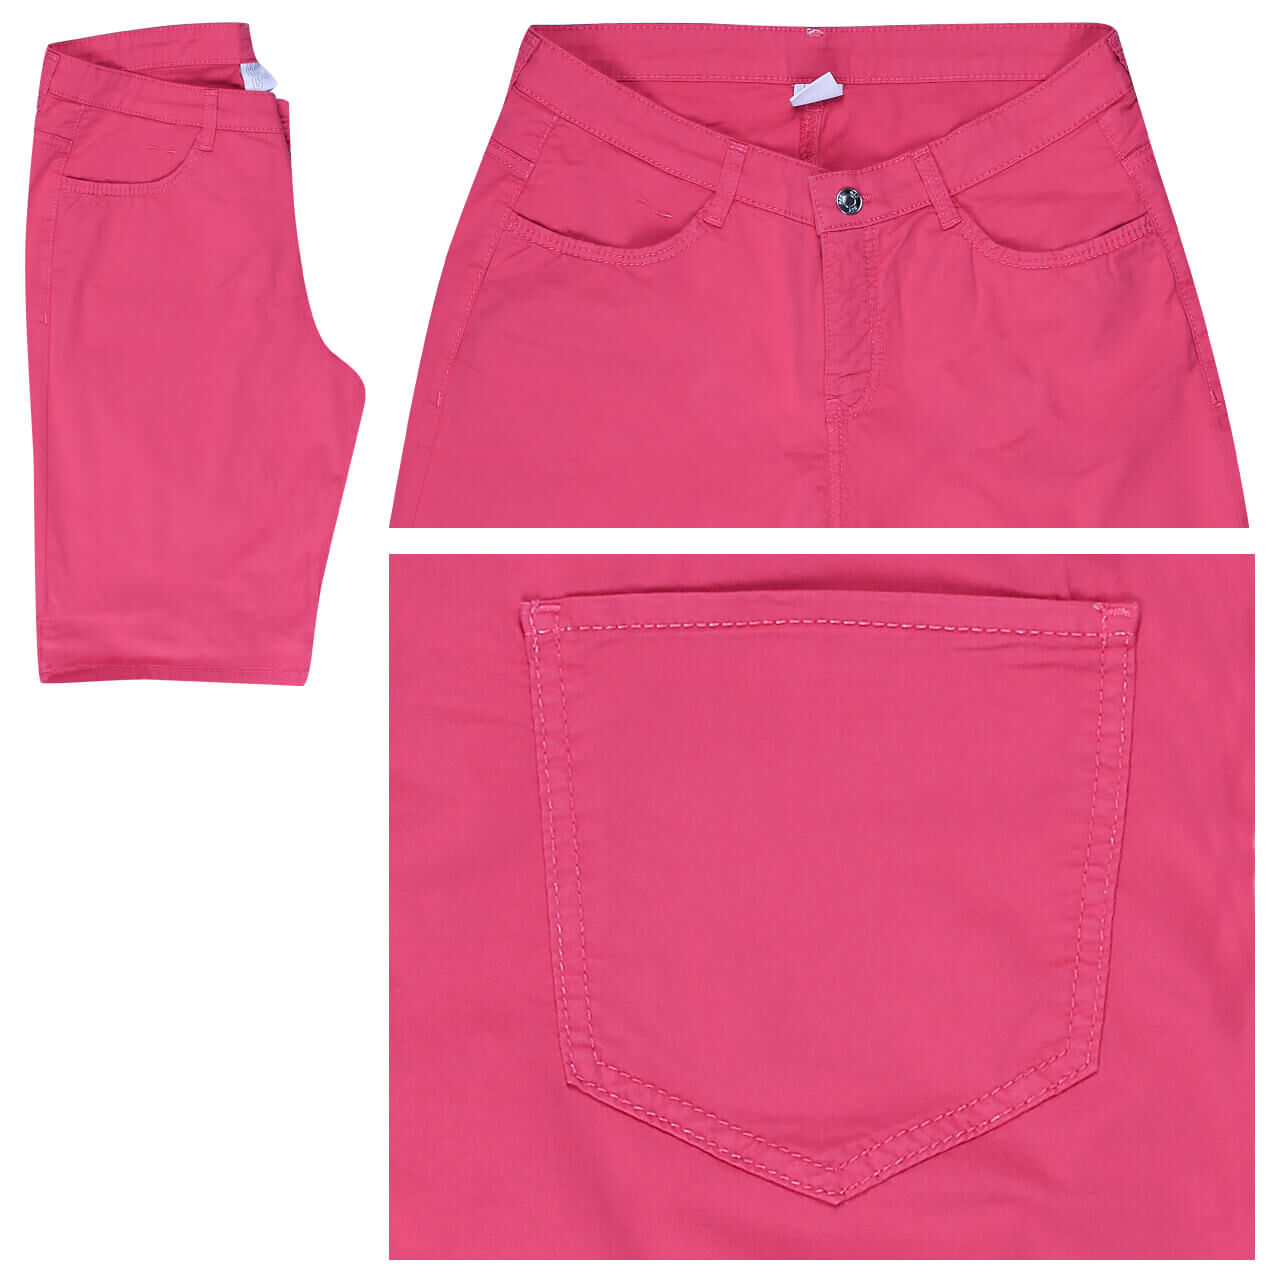 MAC Shorty Baumwollhose für Damen in Pink, FarbNr.: 445R